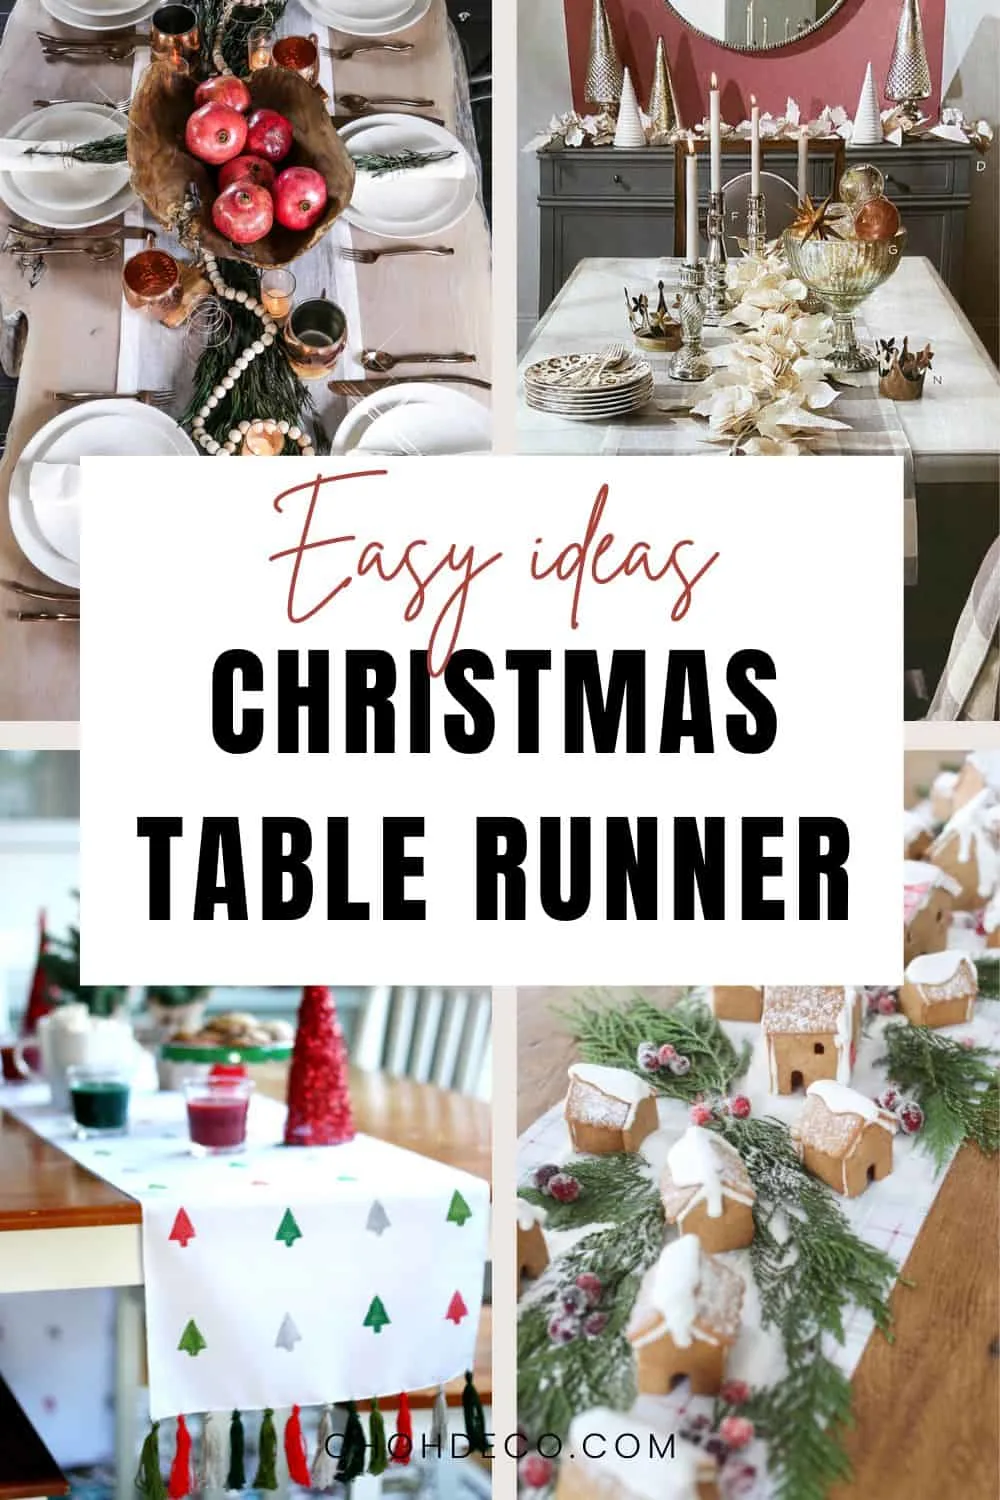 Christmas table runner ideas